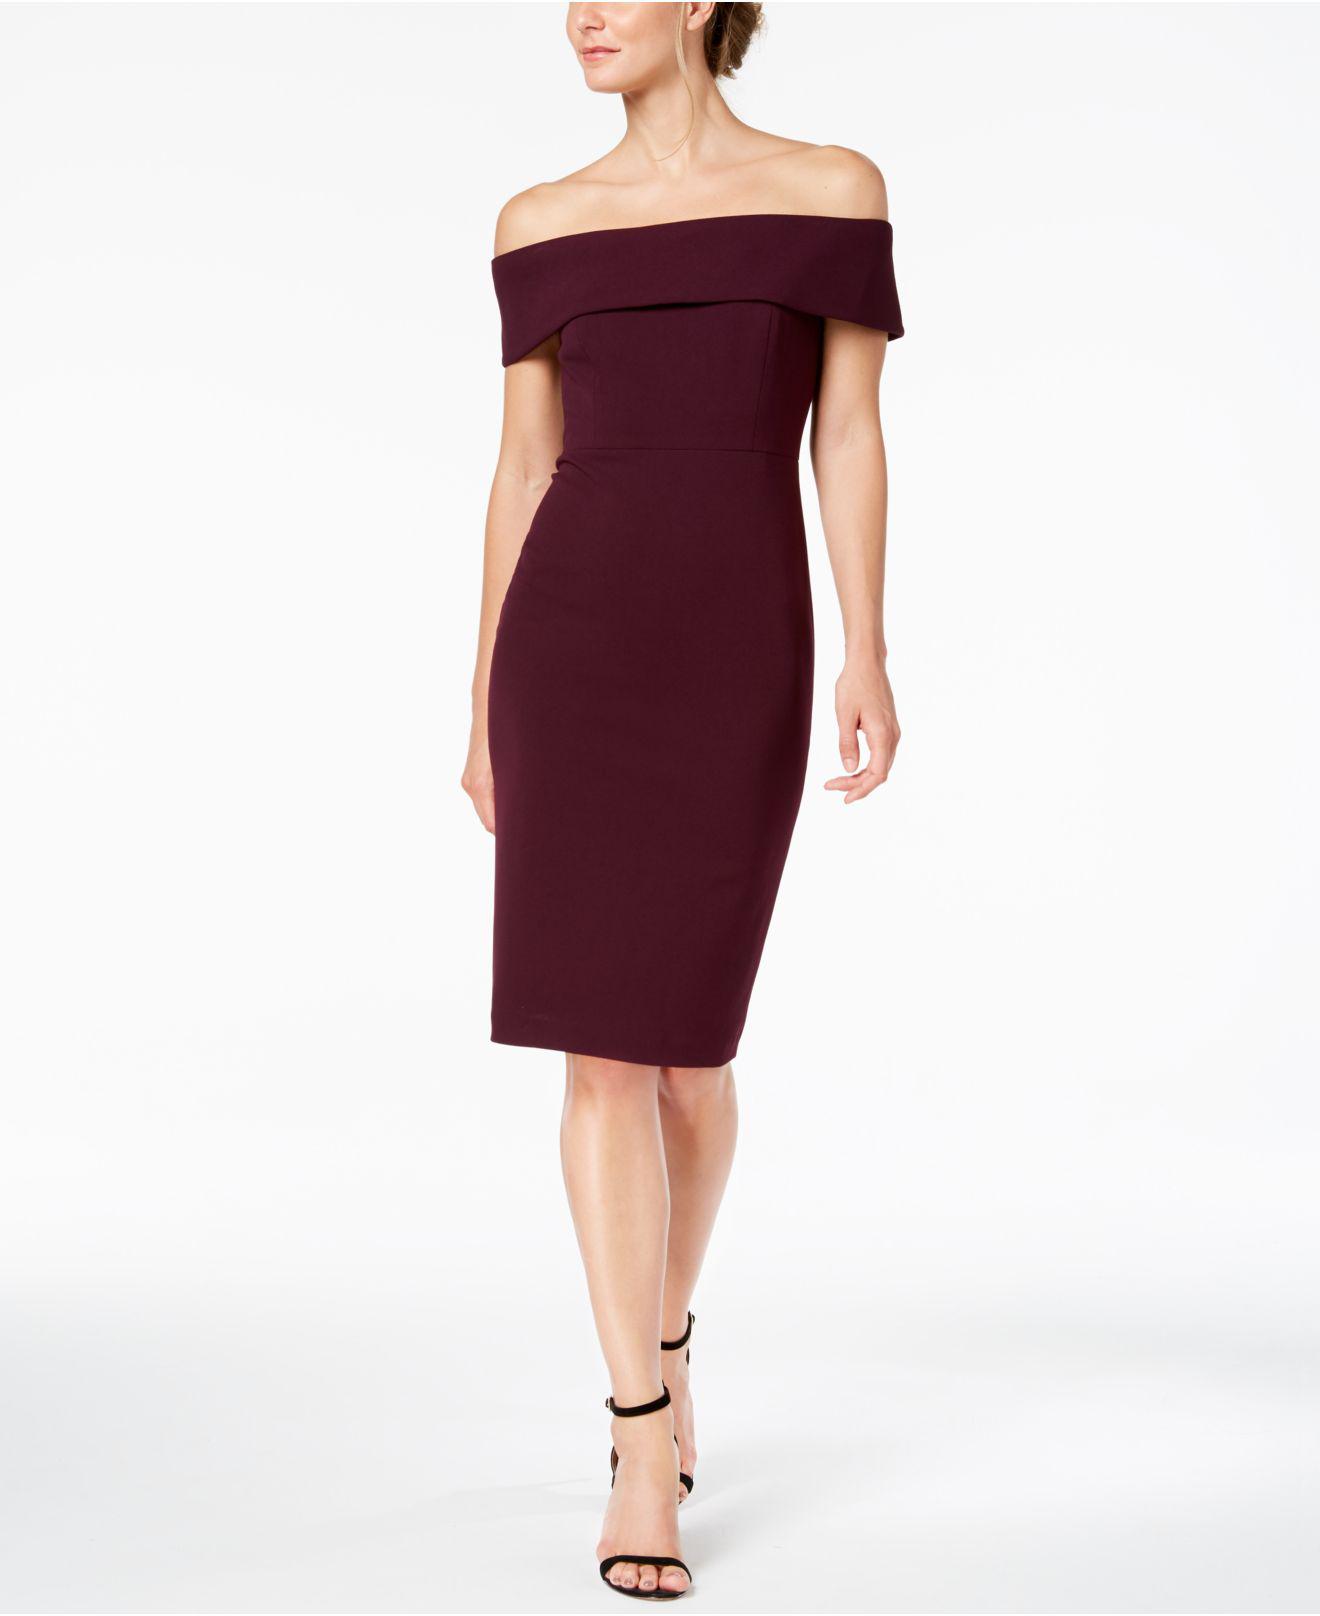 Lyst - Calvin Klein Petite Off-the-shoulder Scuba Crepe Dress in Purple